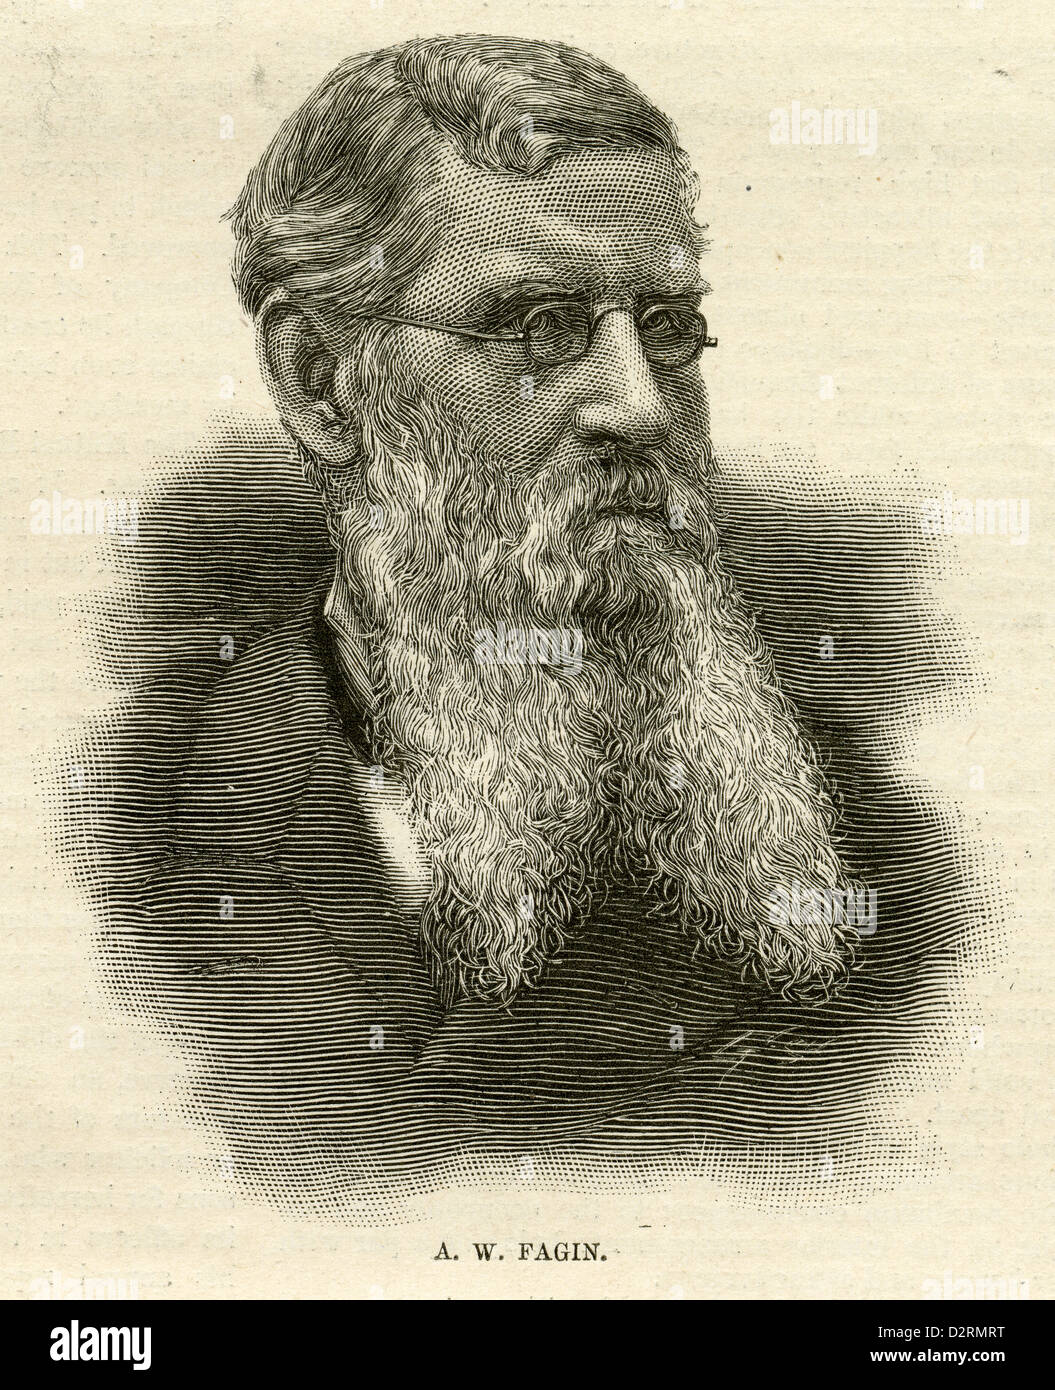 1890 engraving, Aaron W. Fagin of St. Louis, Missouri. Stock Photo